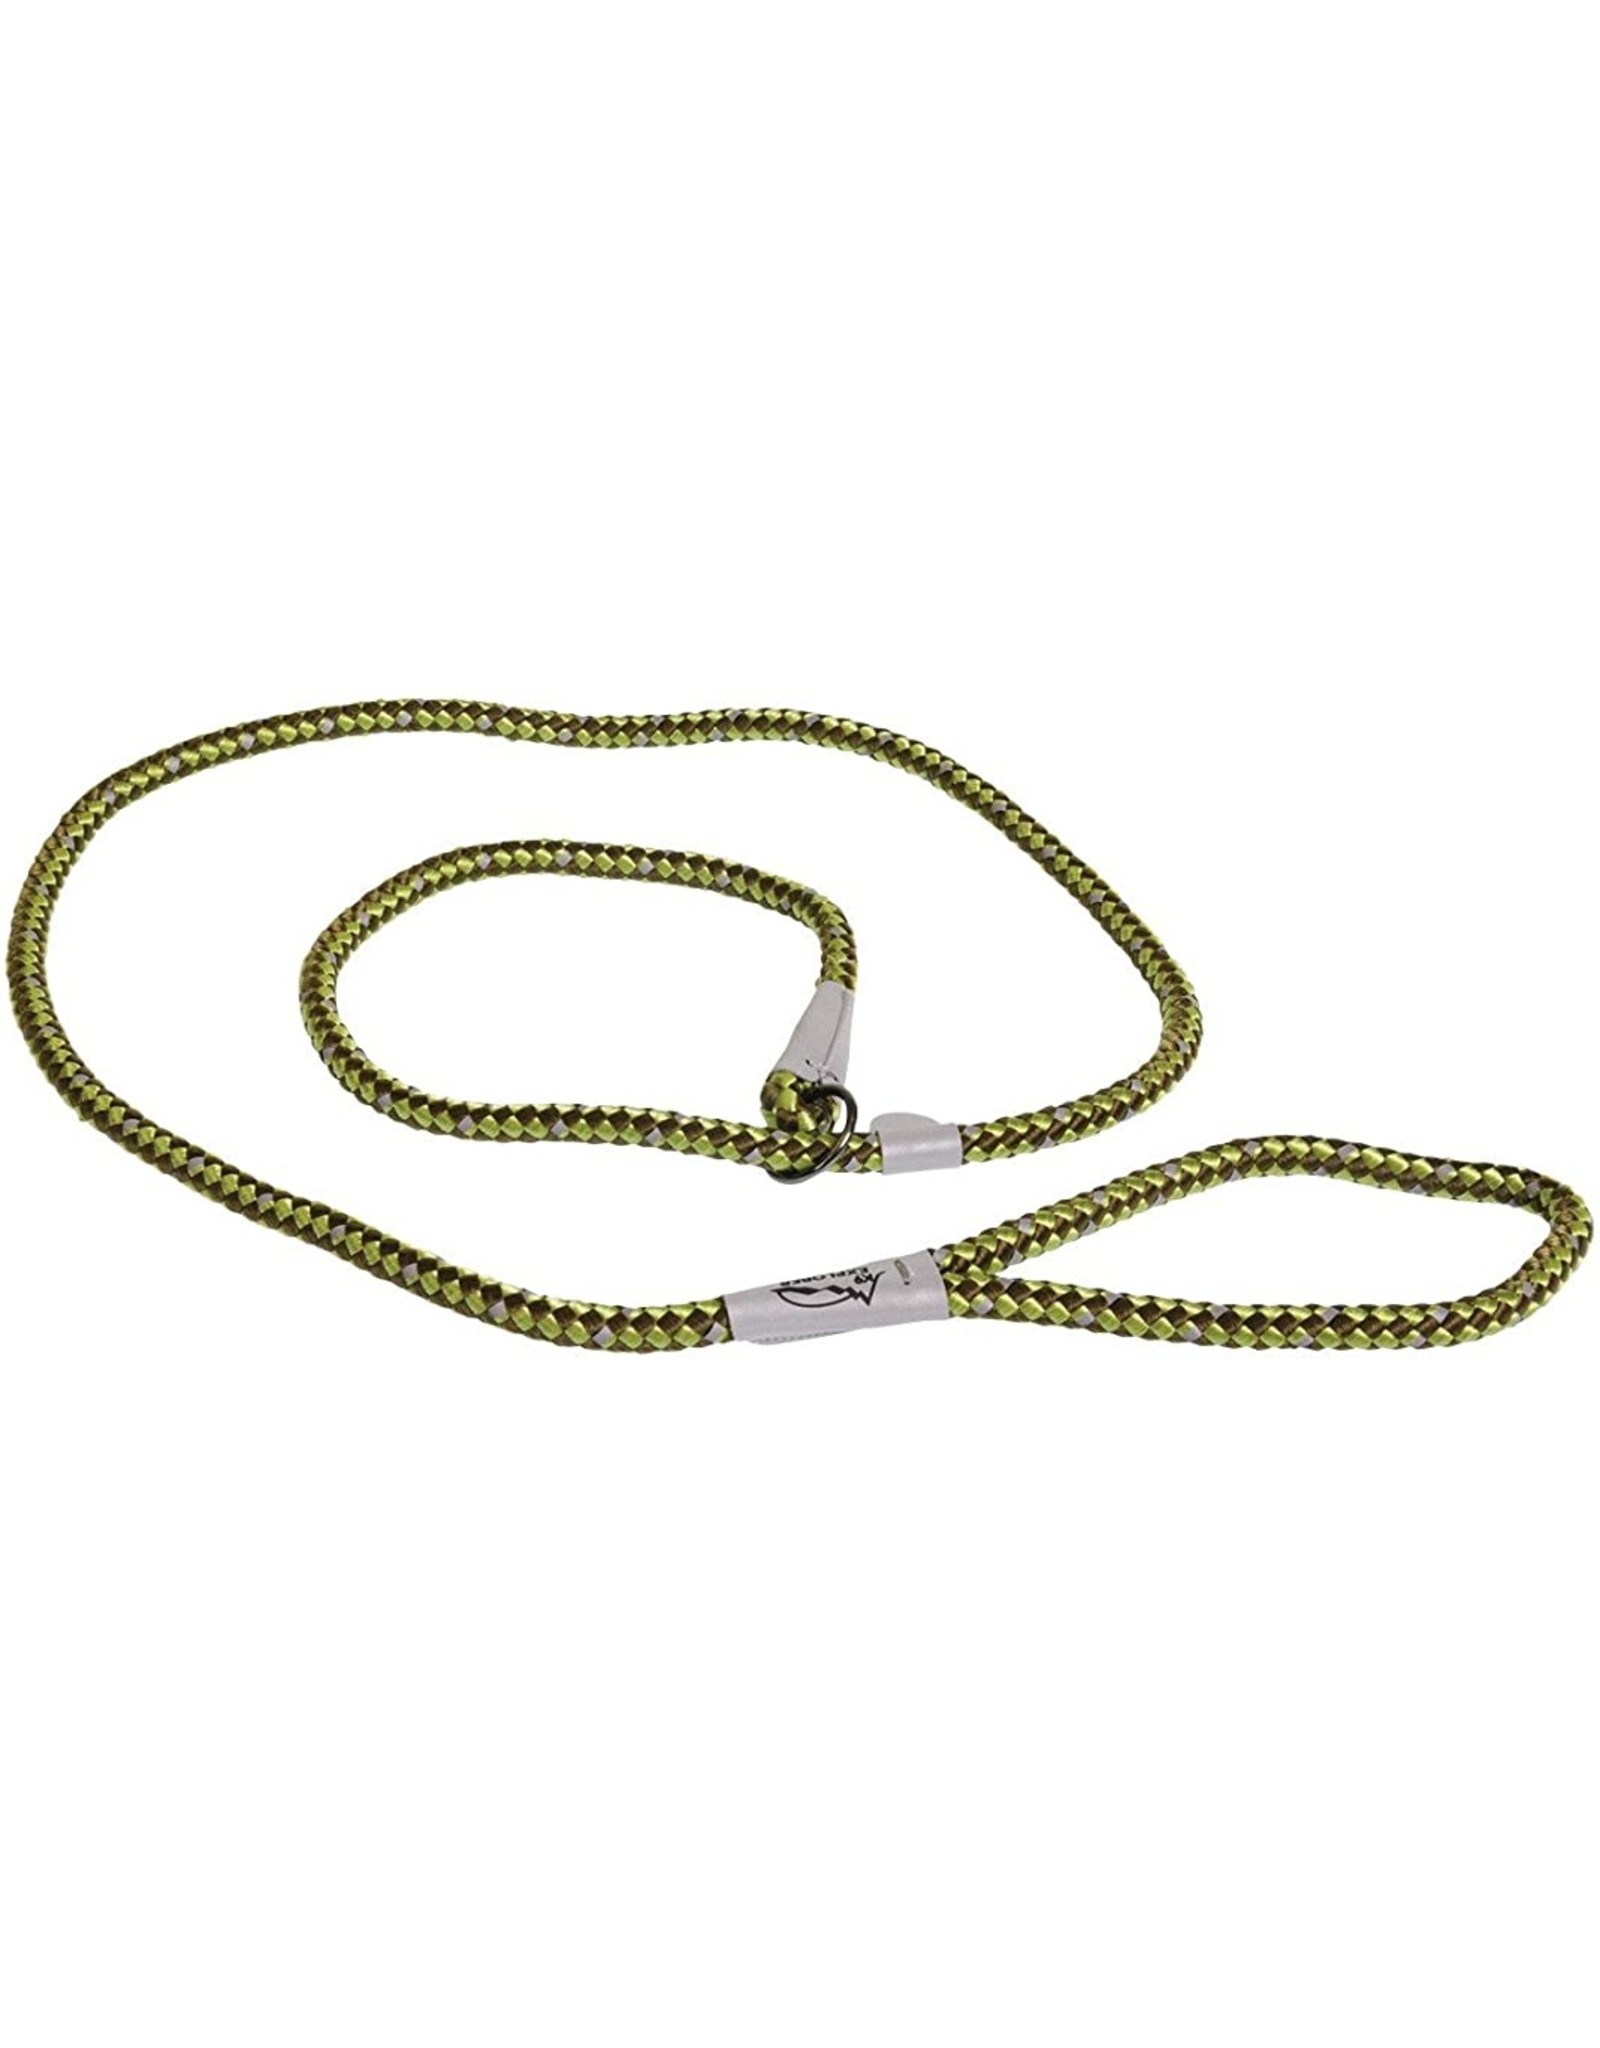 Coastal Pet Products K9 Explorer Braided Rope Slip Lead 6'